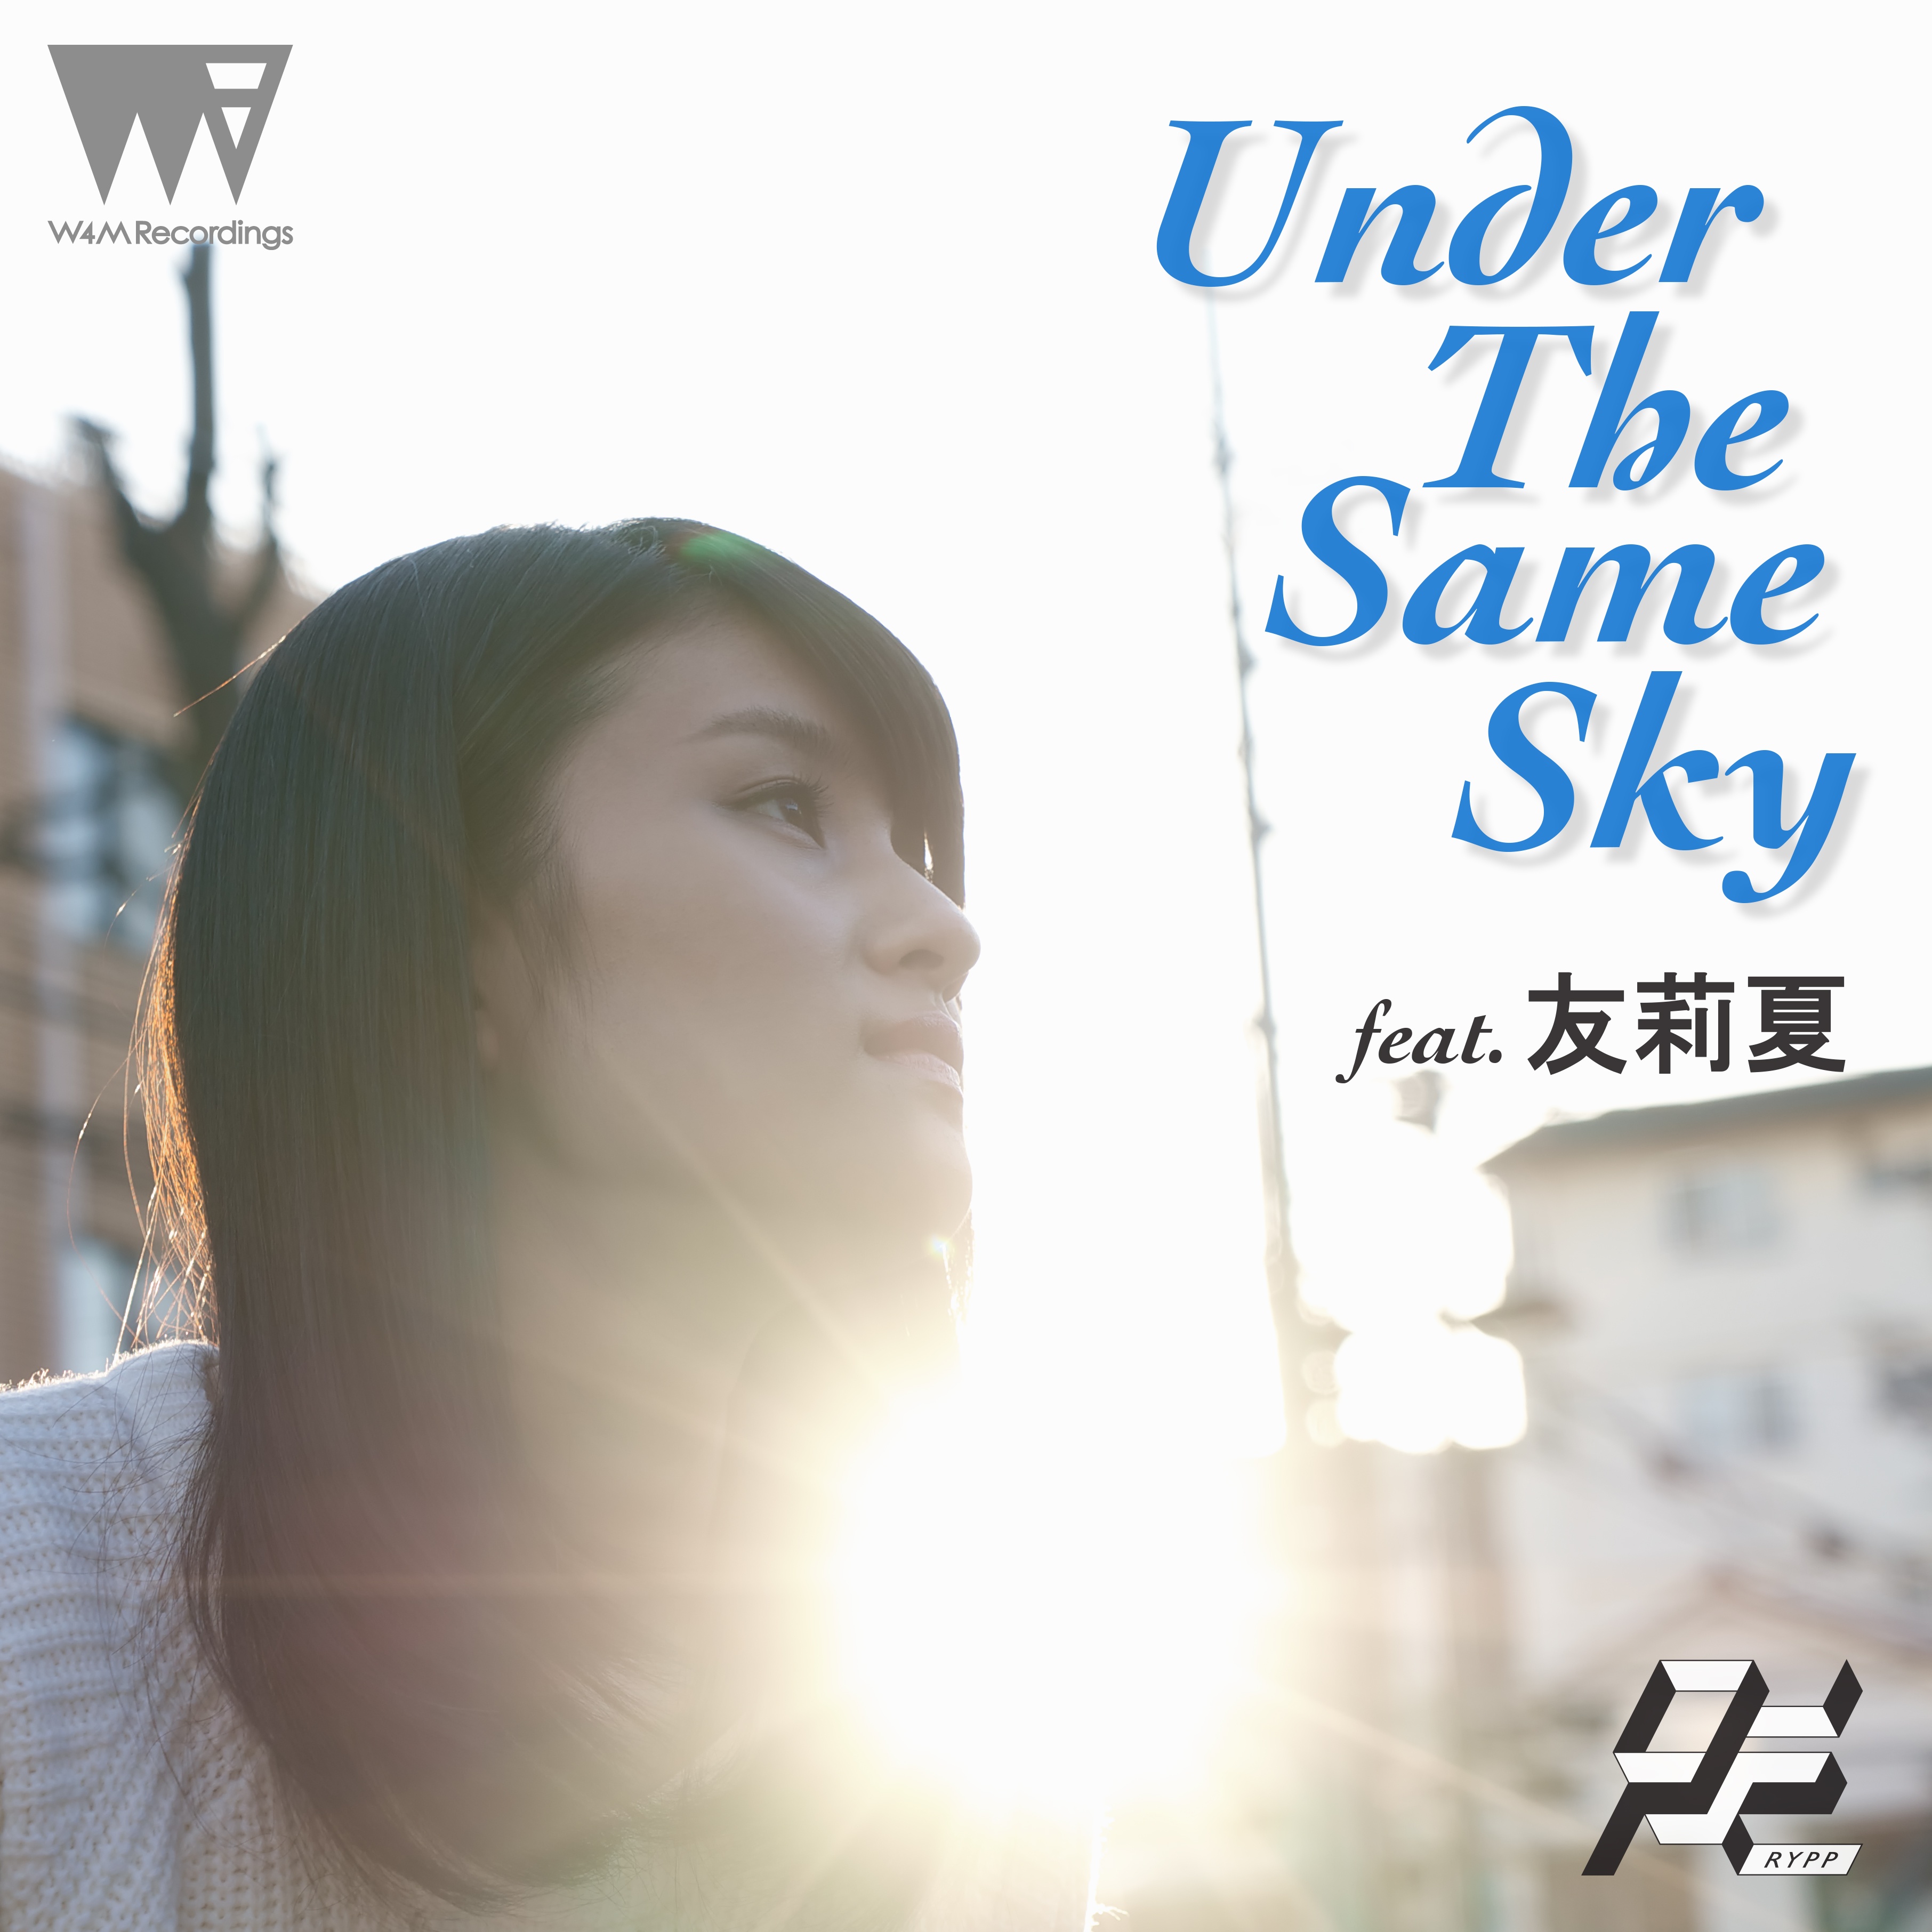 Under The Same Sky feat. you li xia